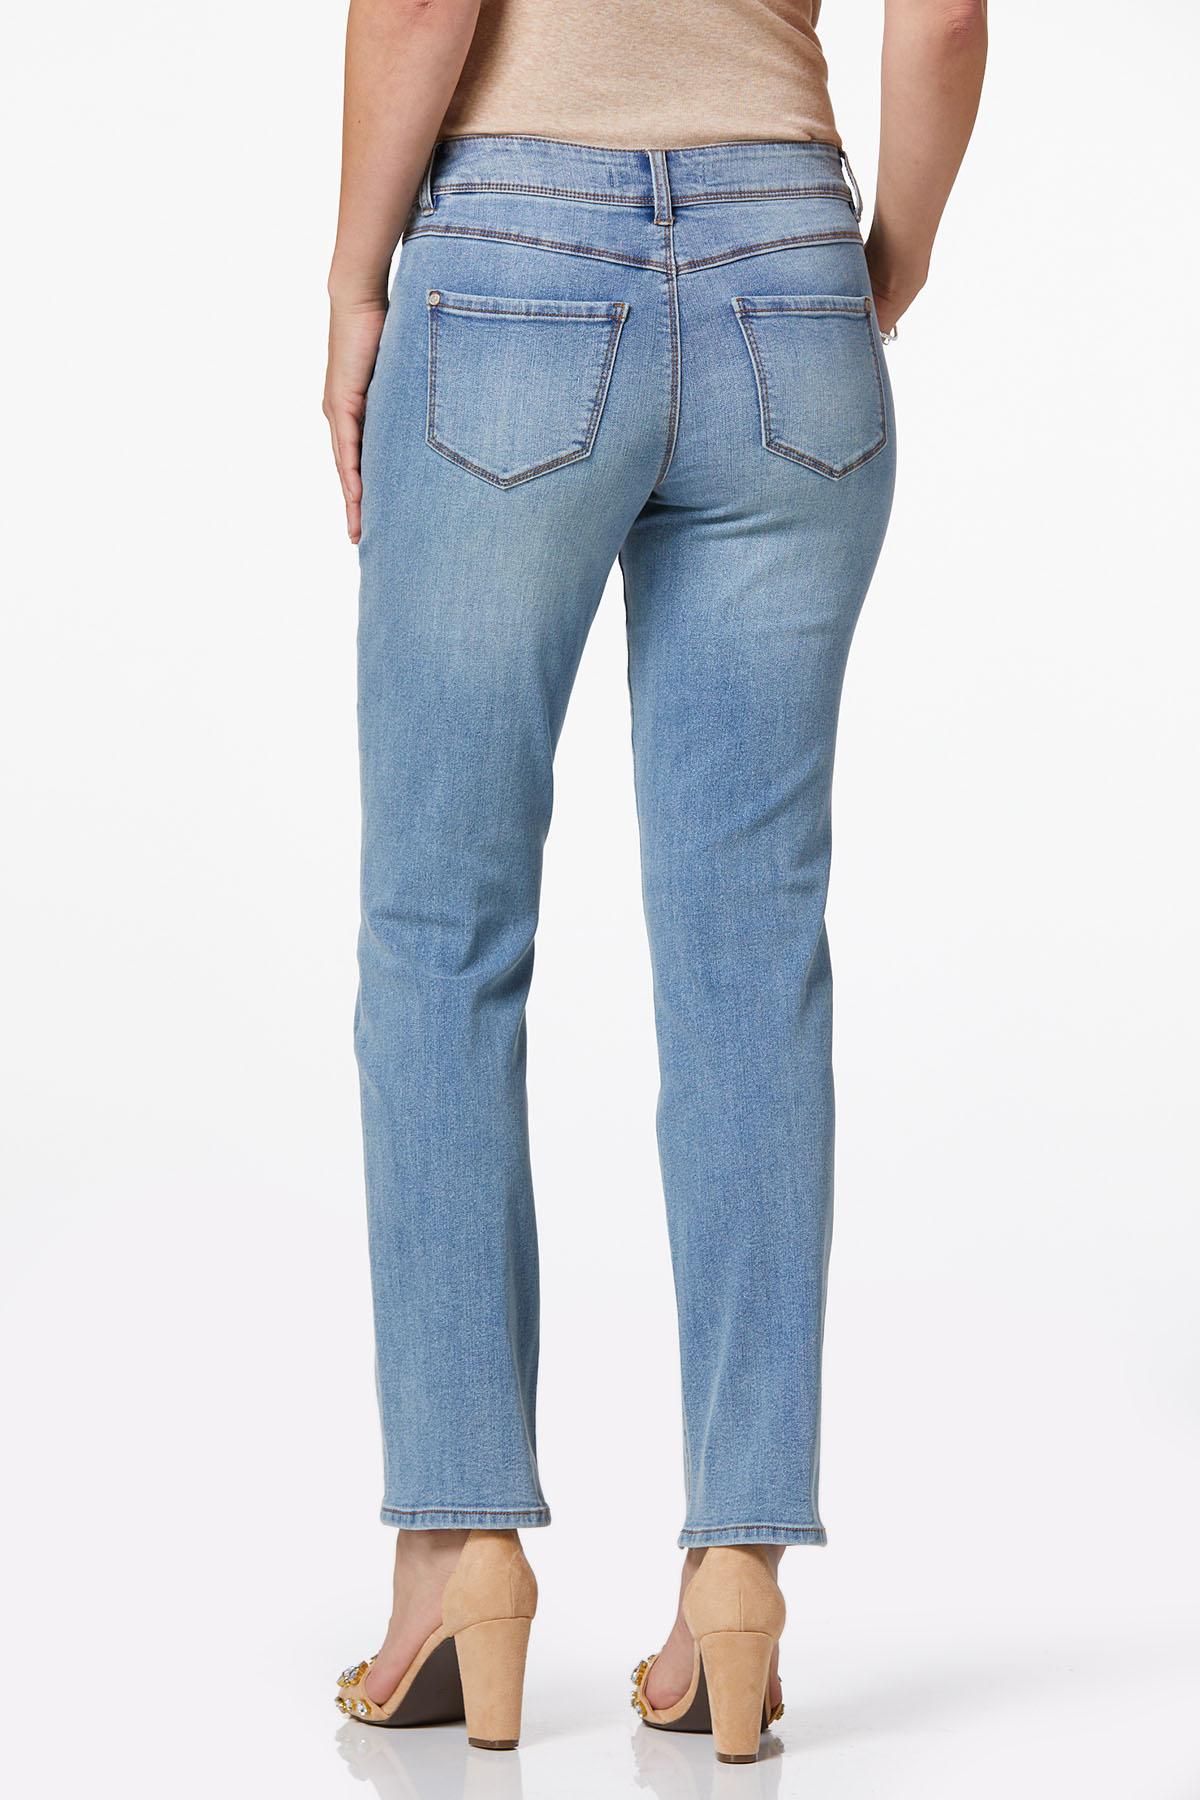 Cato Fashions  Cato Mid Rise Straight Jeans